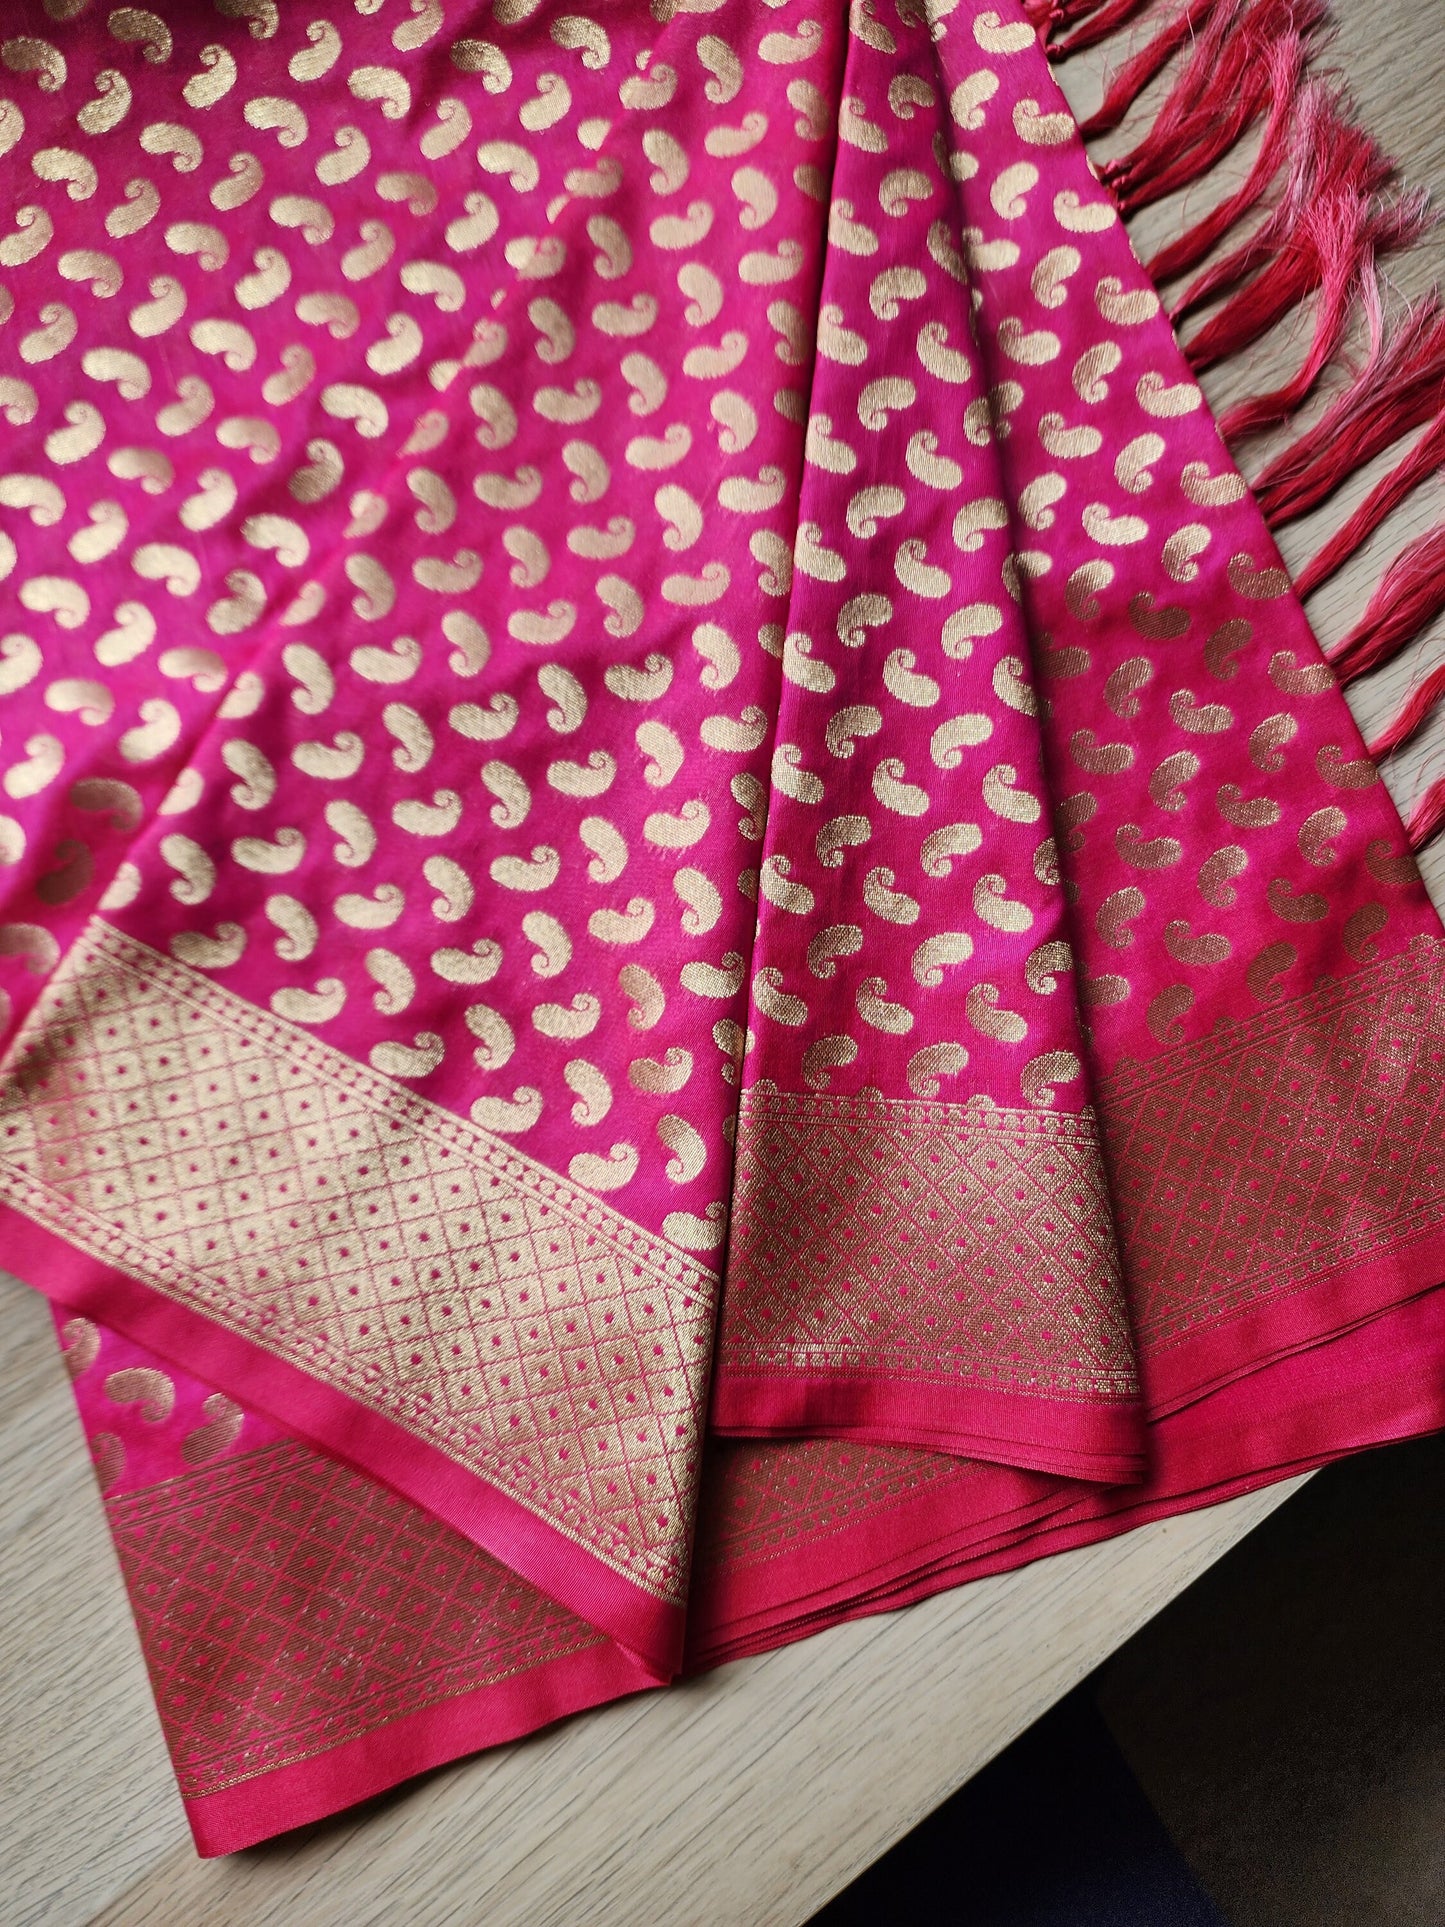 Banarasi Silk Pink Dupatta with gold handweaving, Indian traditional and Festive designer dupatta, luxurious soft Banarsi dupatta